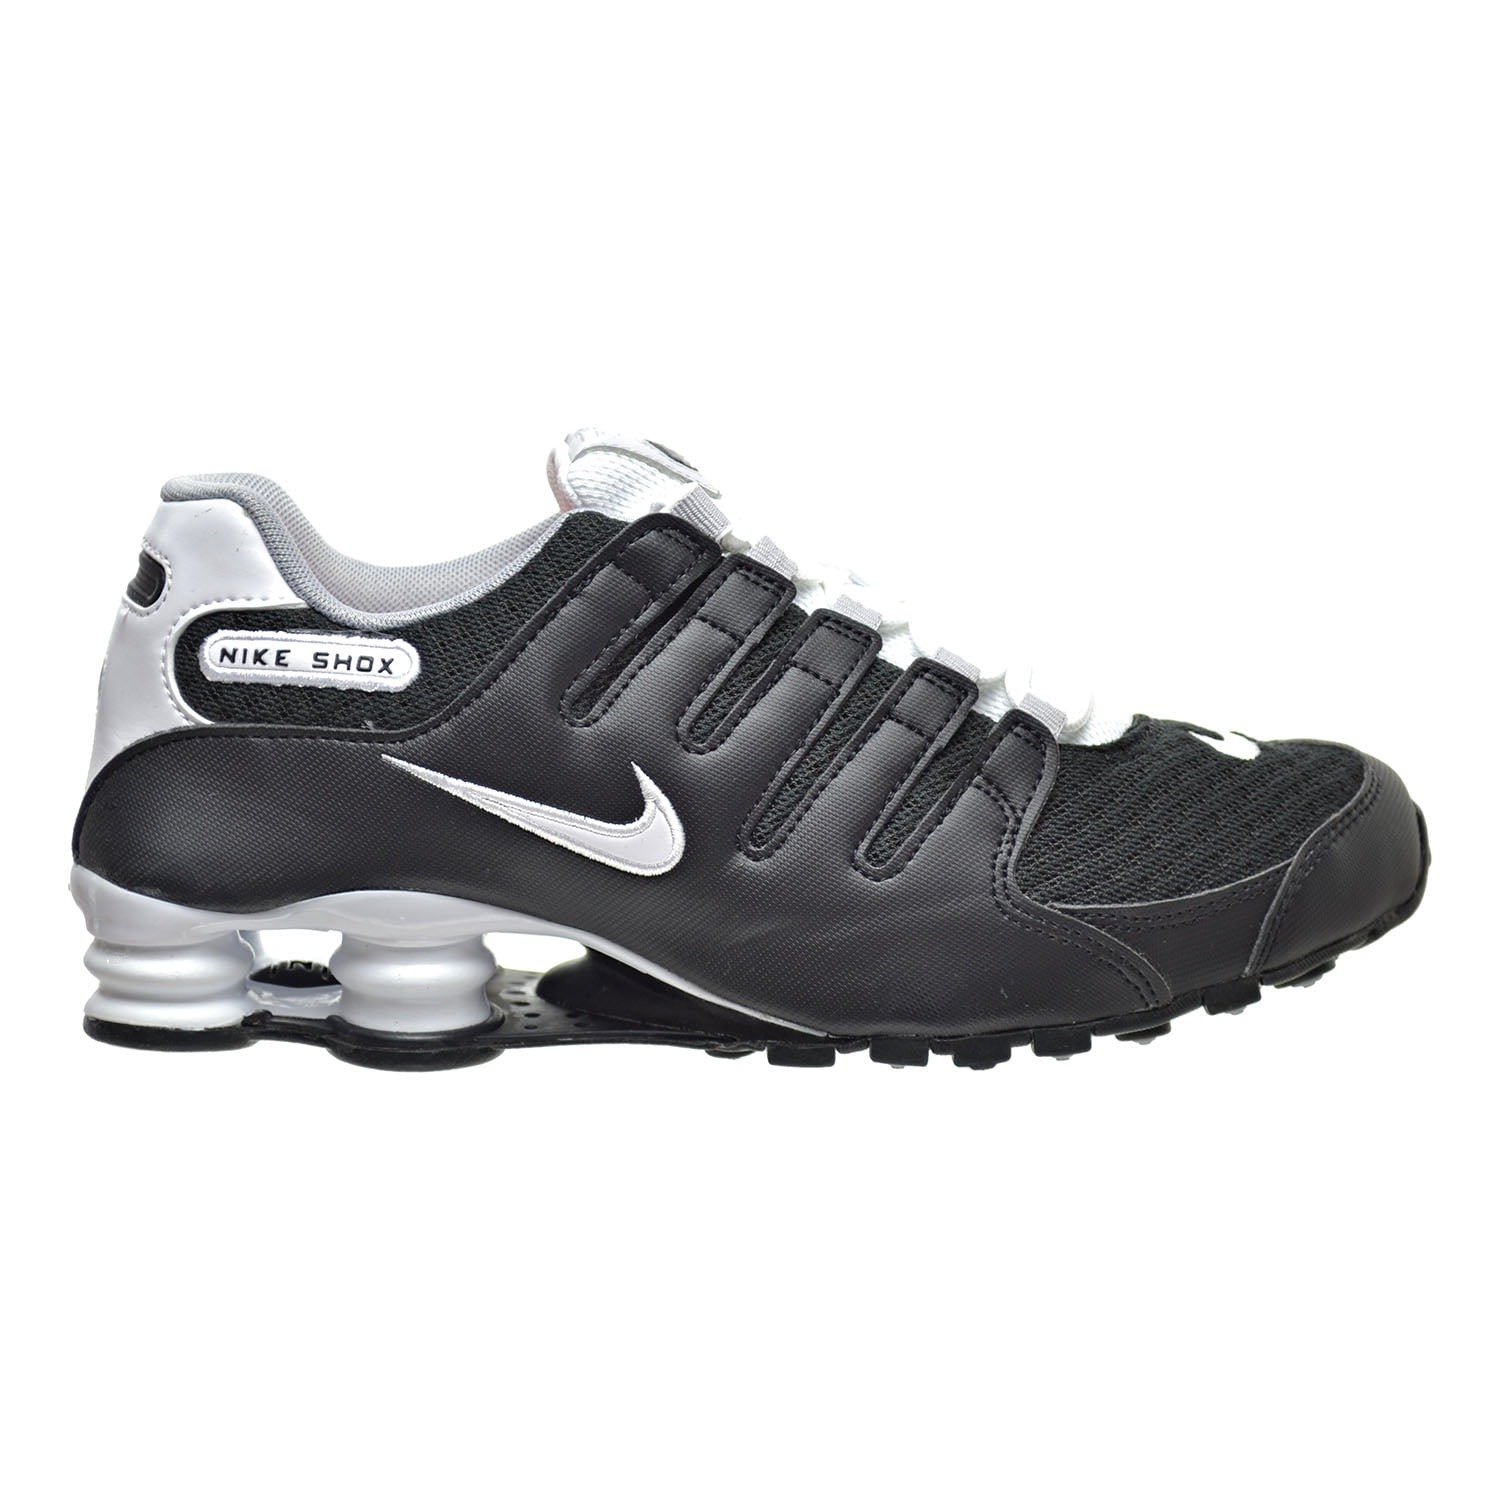 Nike NZ SE Men's Shoes Black/White/Wolf Grey (8 D(M) US) - Walmart.com